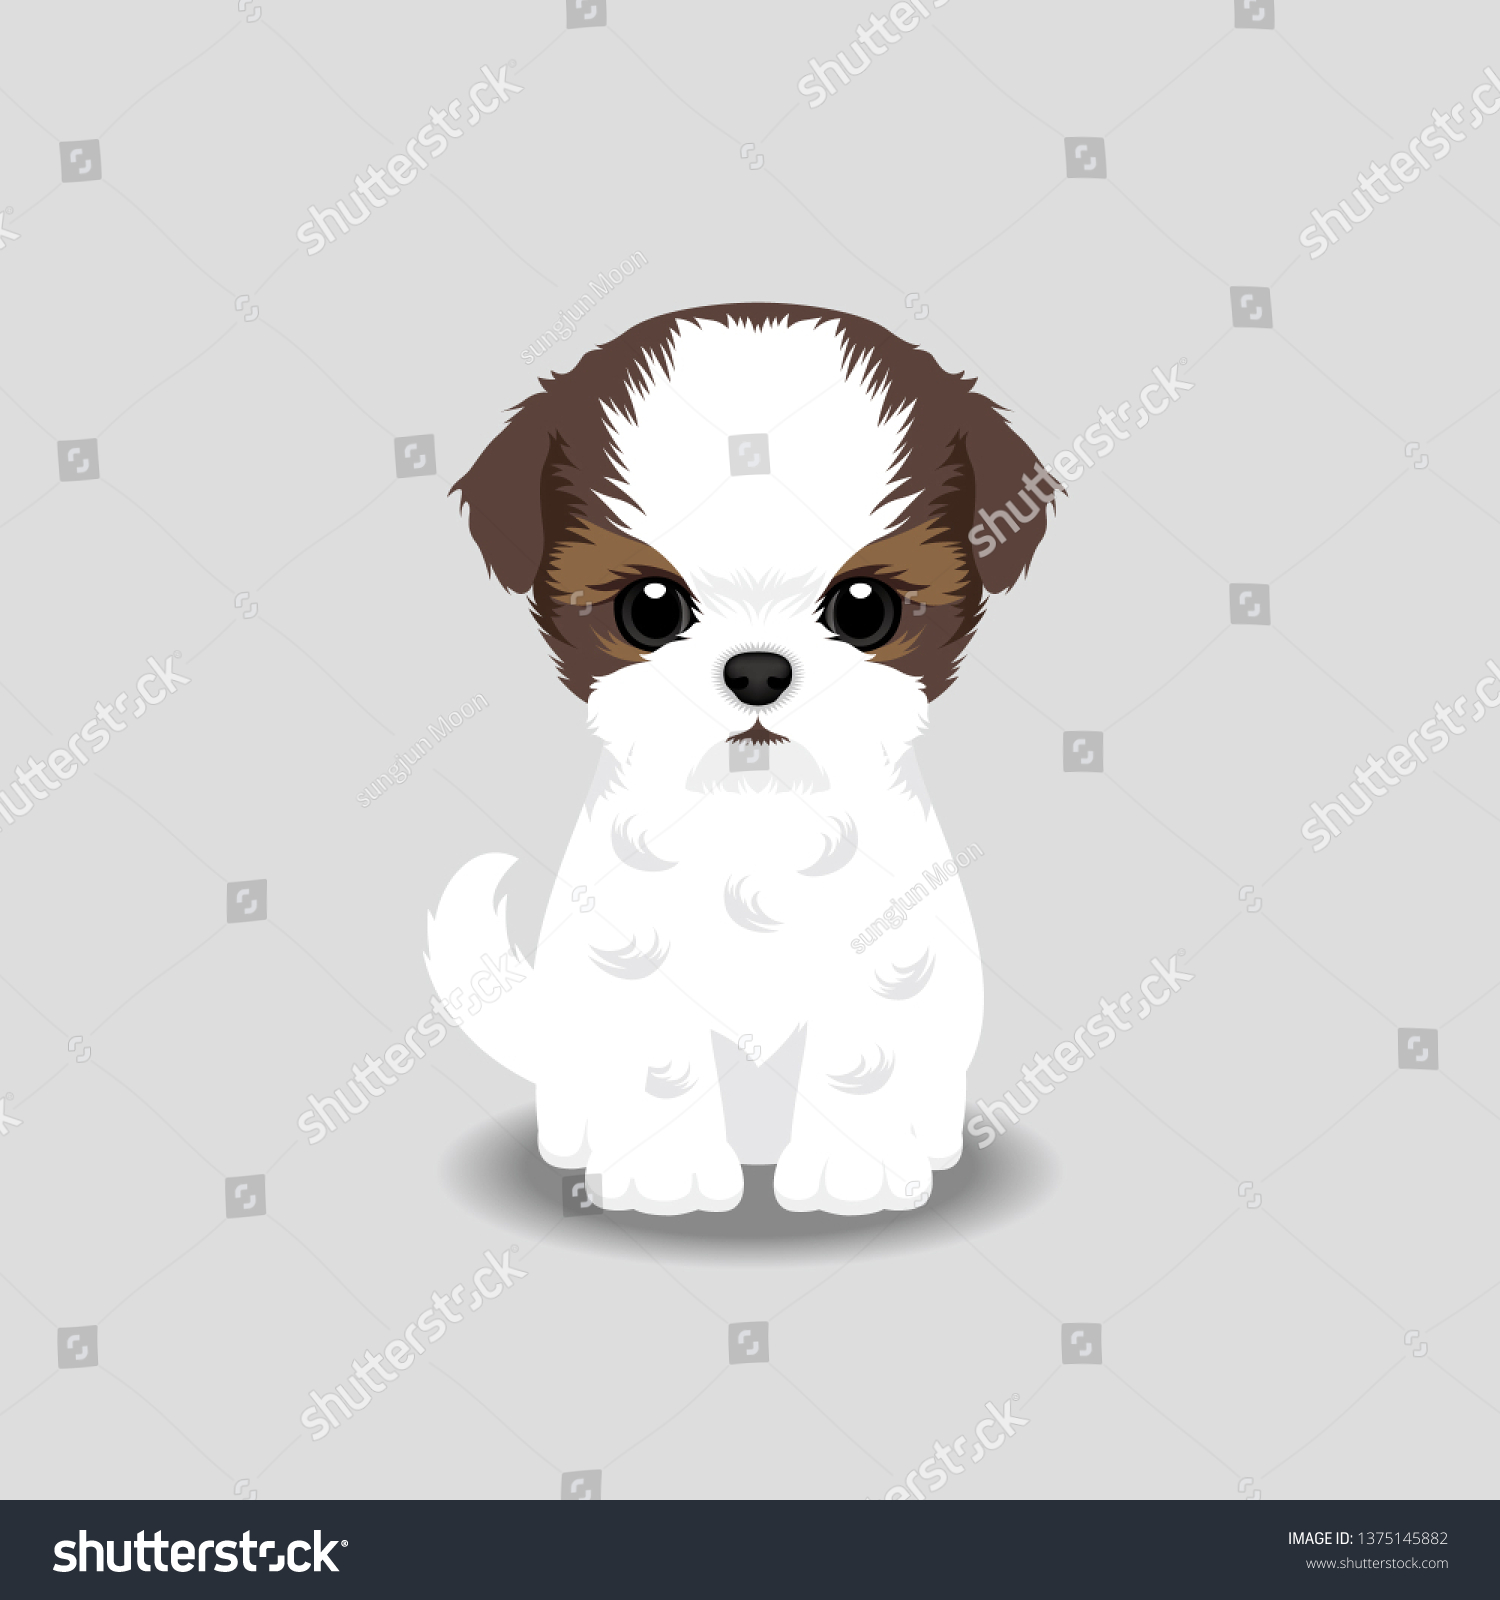 SVG of Shih Tzu Puppy Vector Illustration. Dog isolated svg